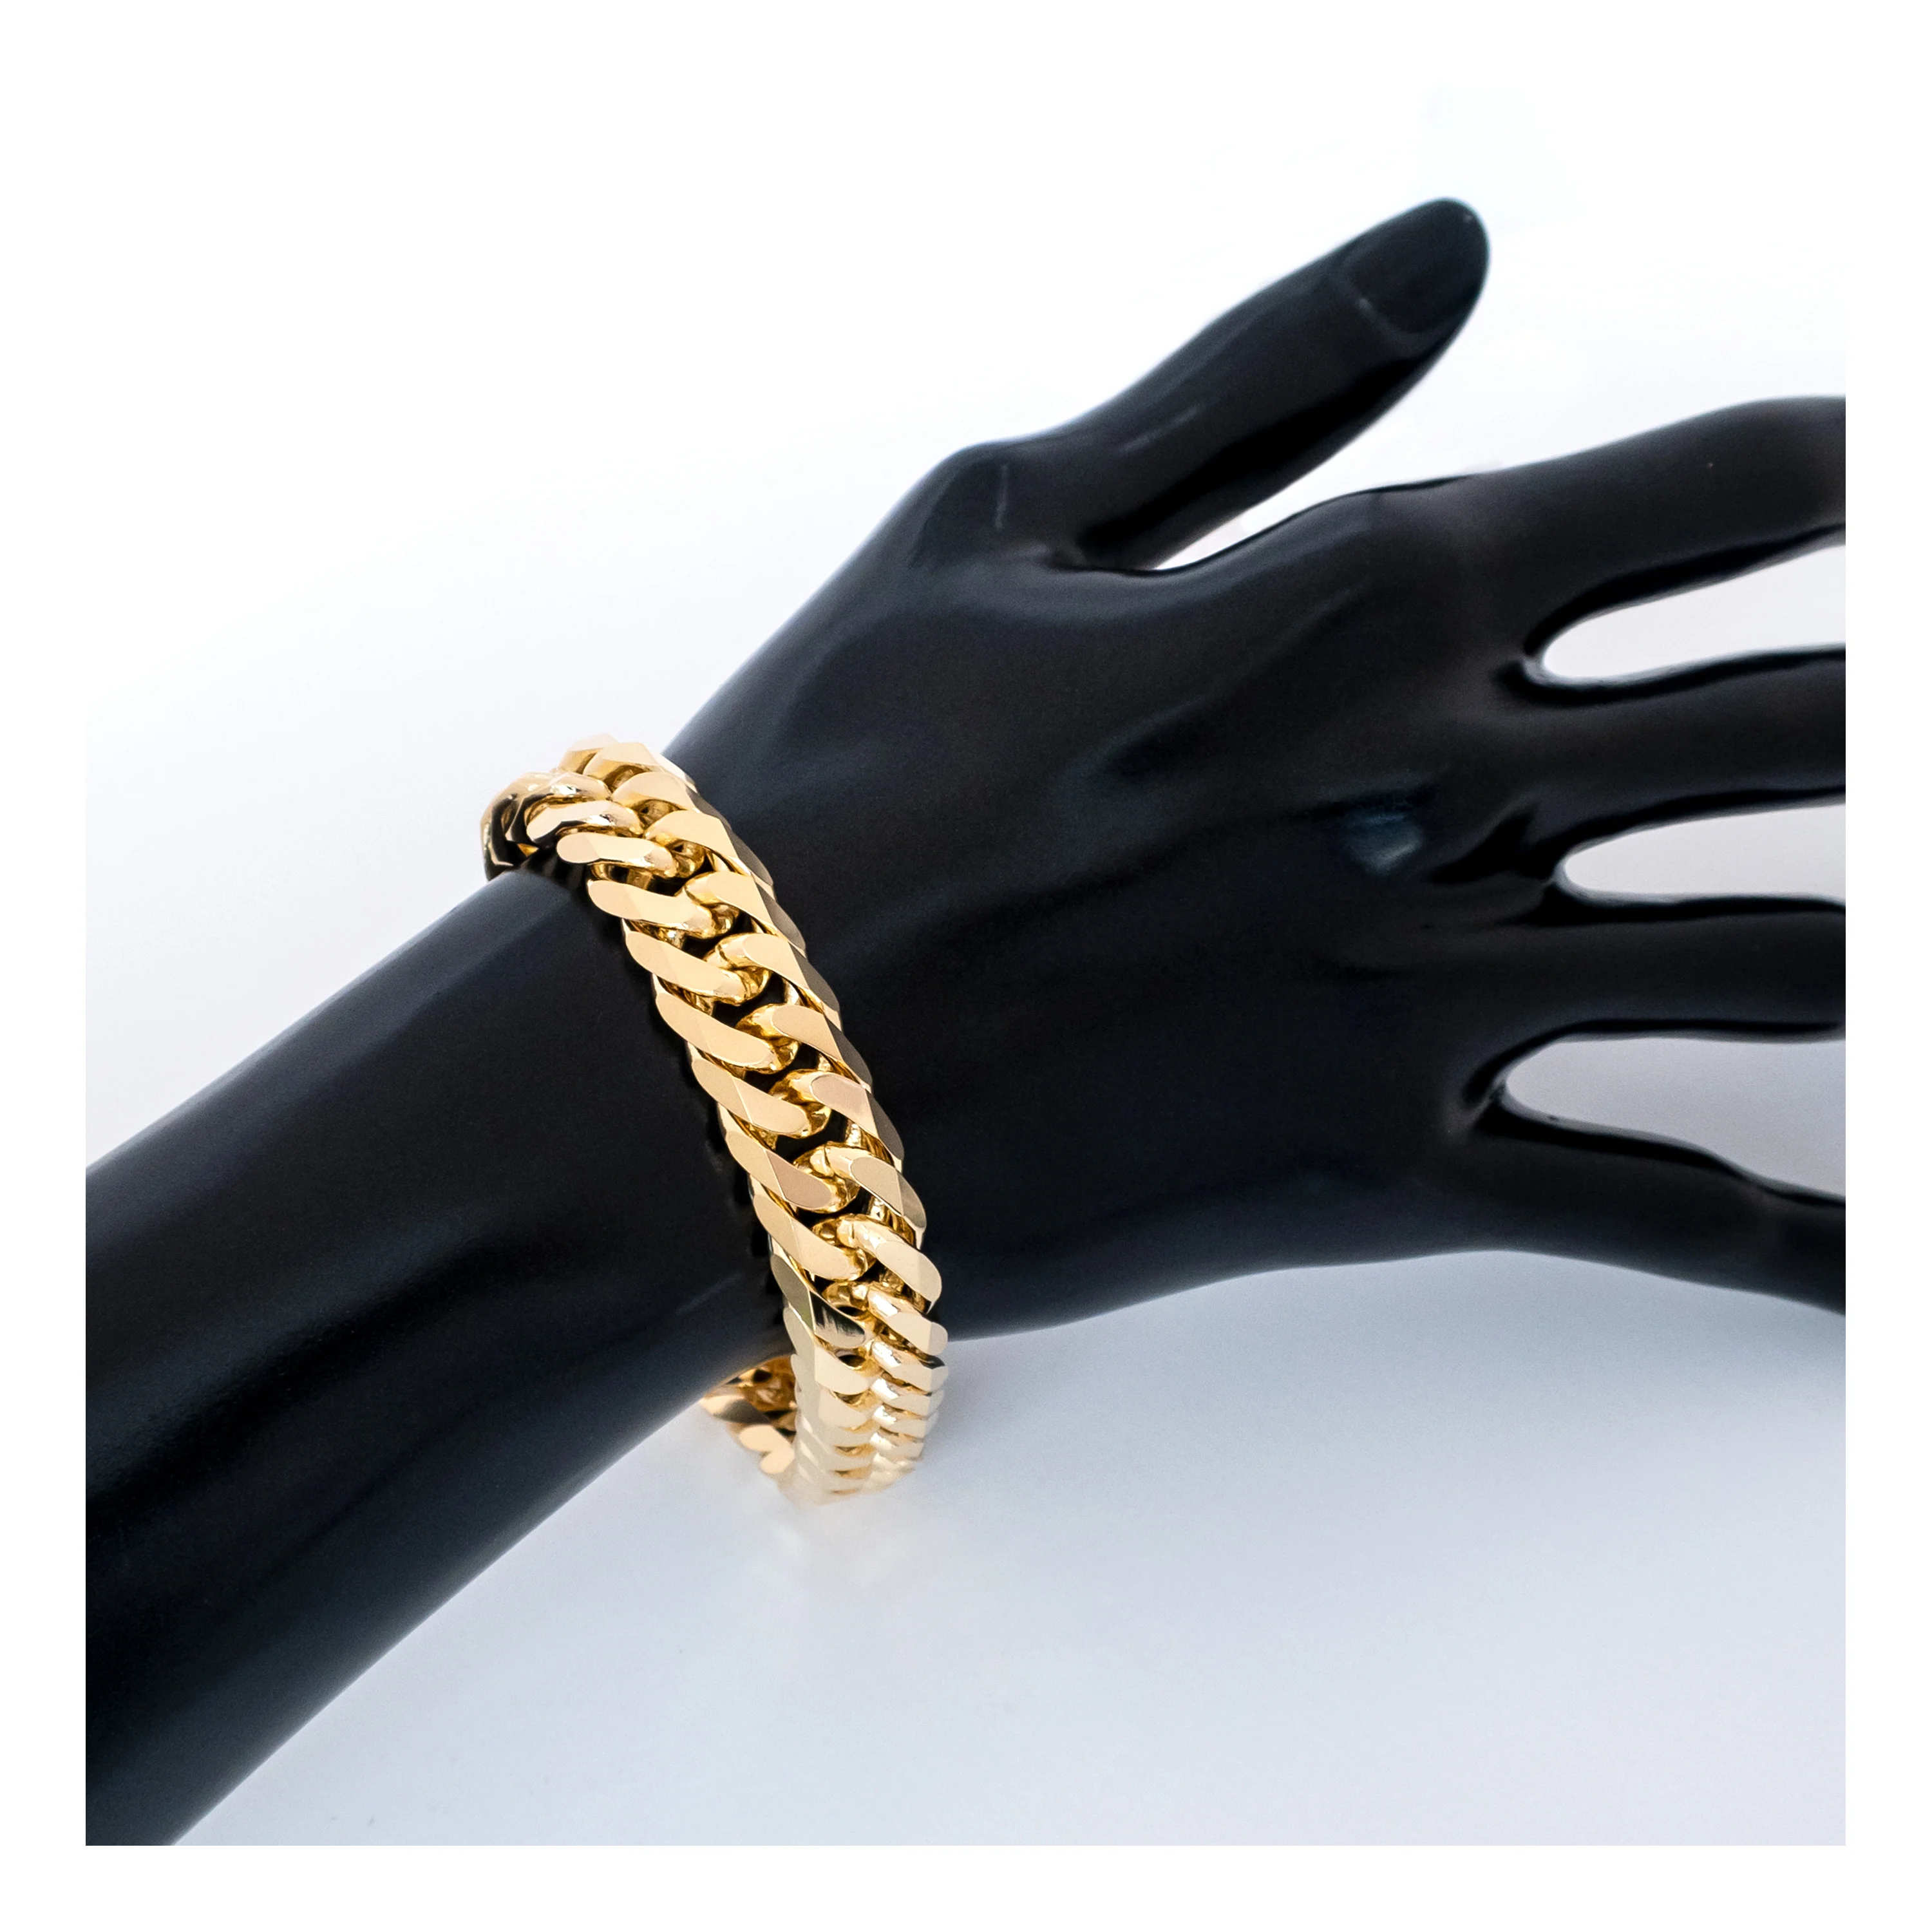 Buy Mens Bracelet Cuff Bracelet Men Gold Bangle Bracelet Online in India   Etsy